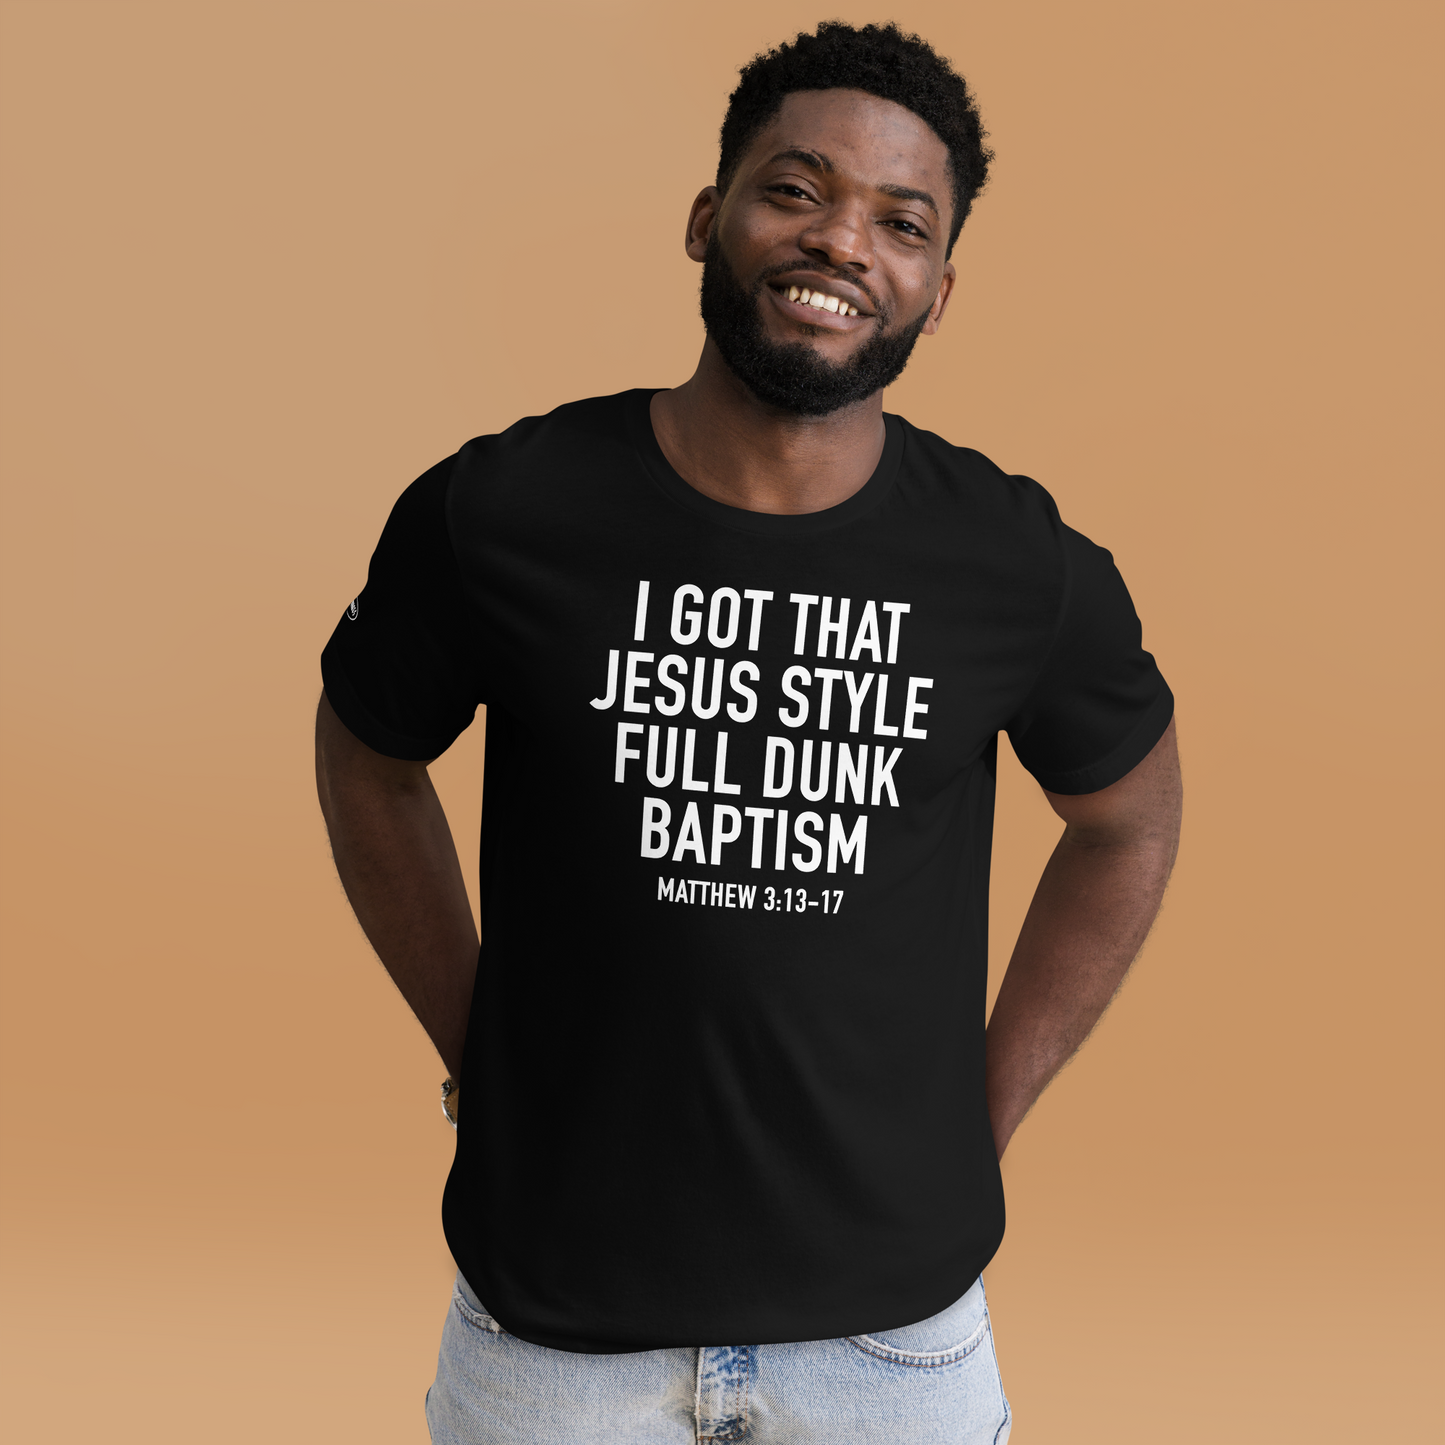 CHRISTIAN - I got that Jesus Style Full Dunk Baptism - Matthew 3:13-17